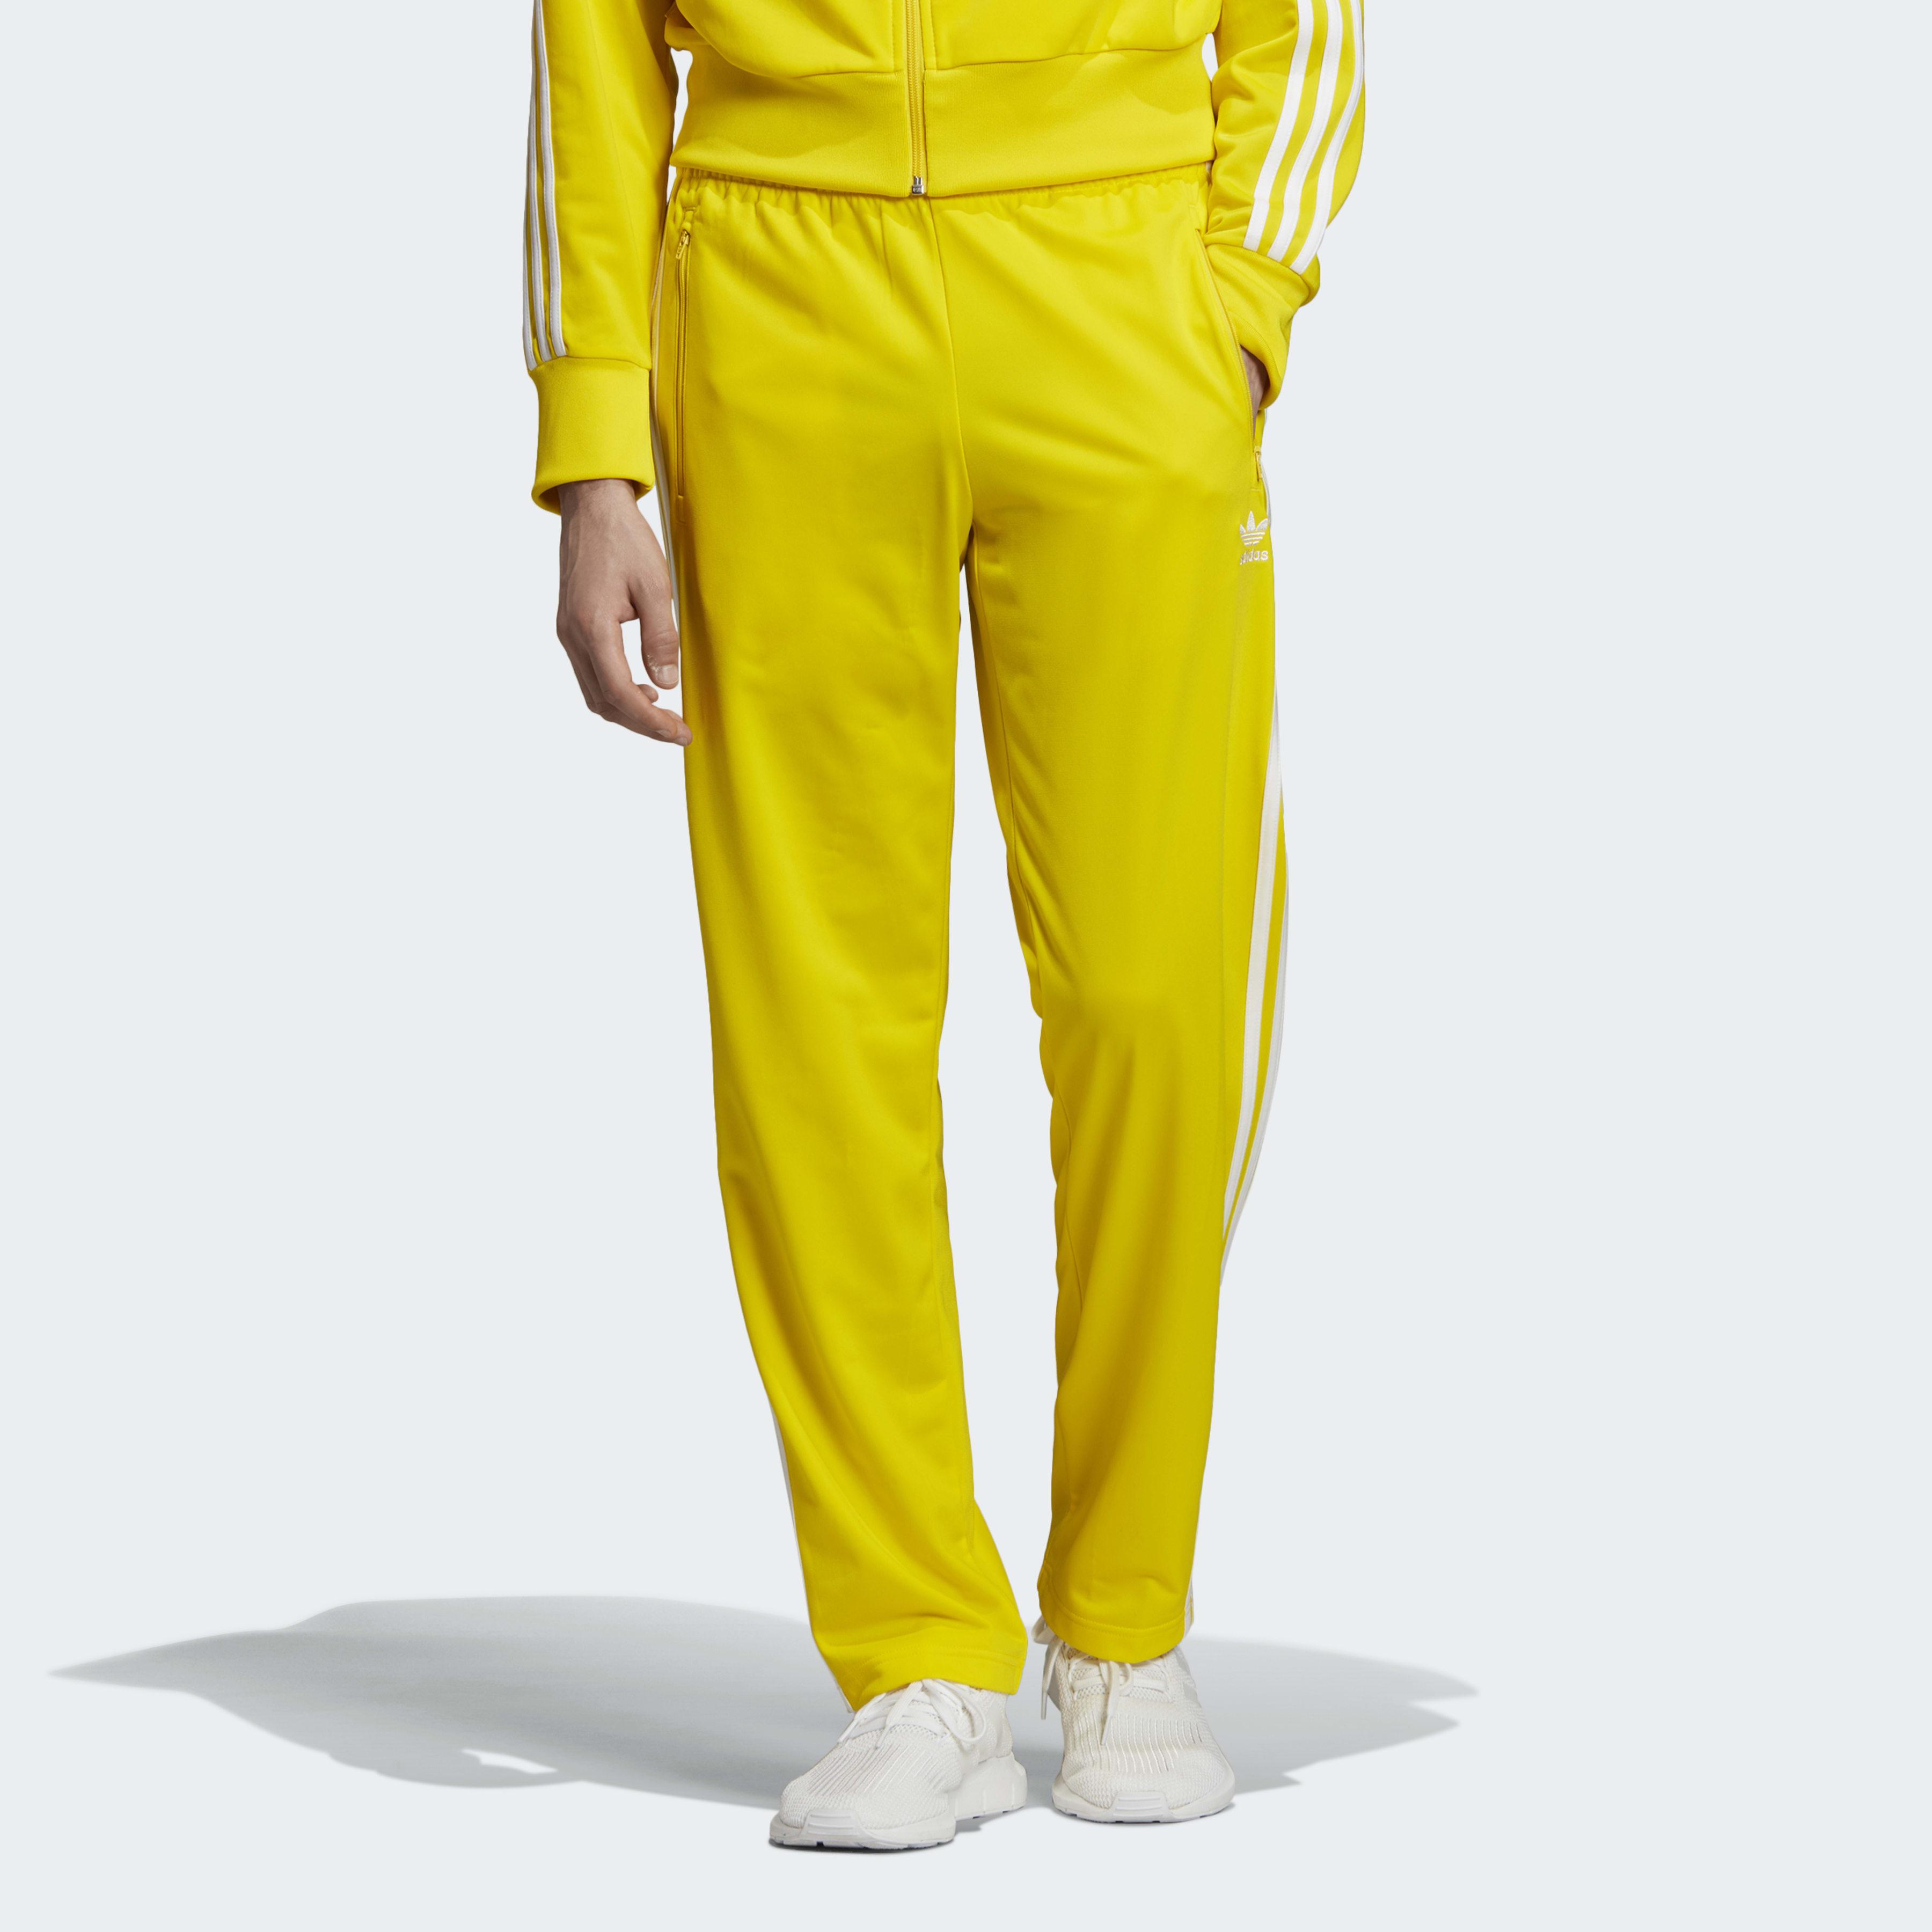 pantalon adidas jaune homme Off 65% - www.tatarasa.com